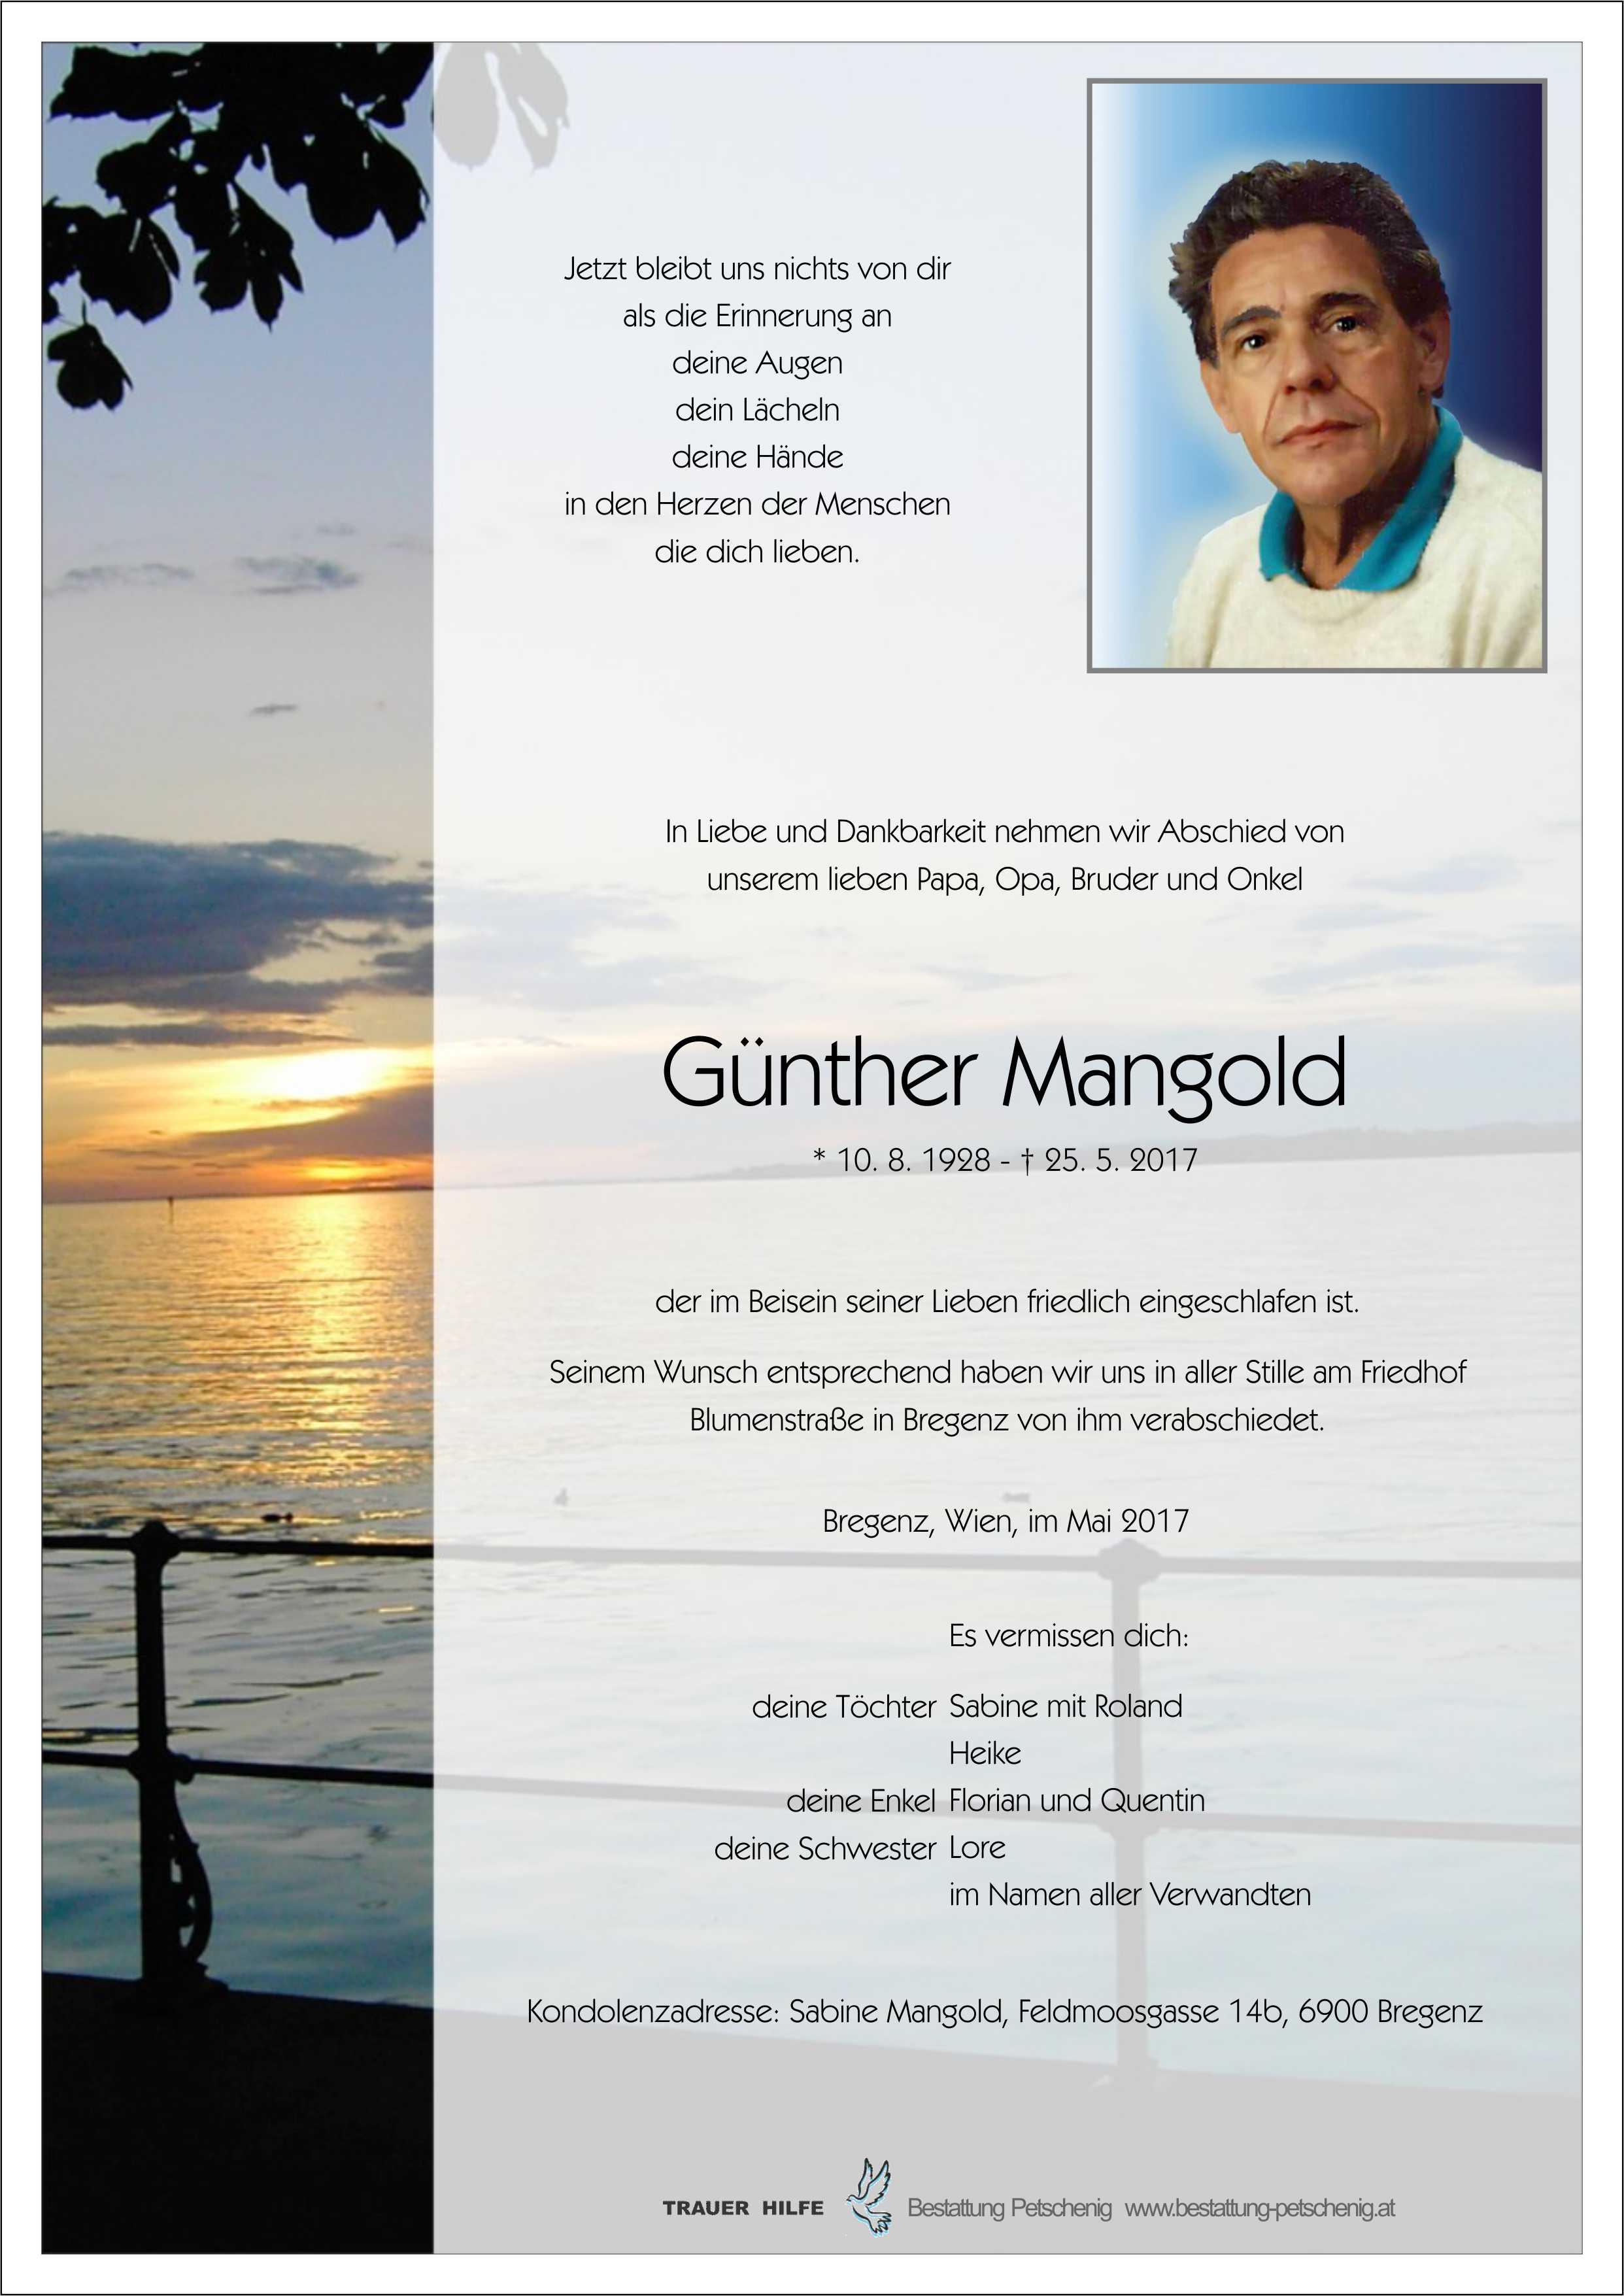 Günther Mangold